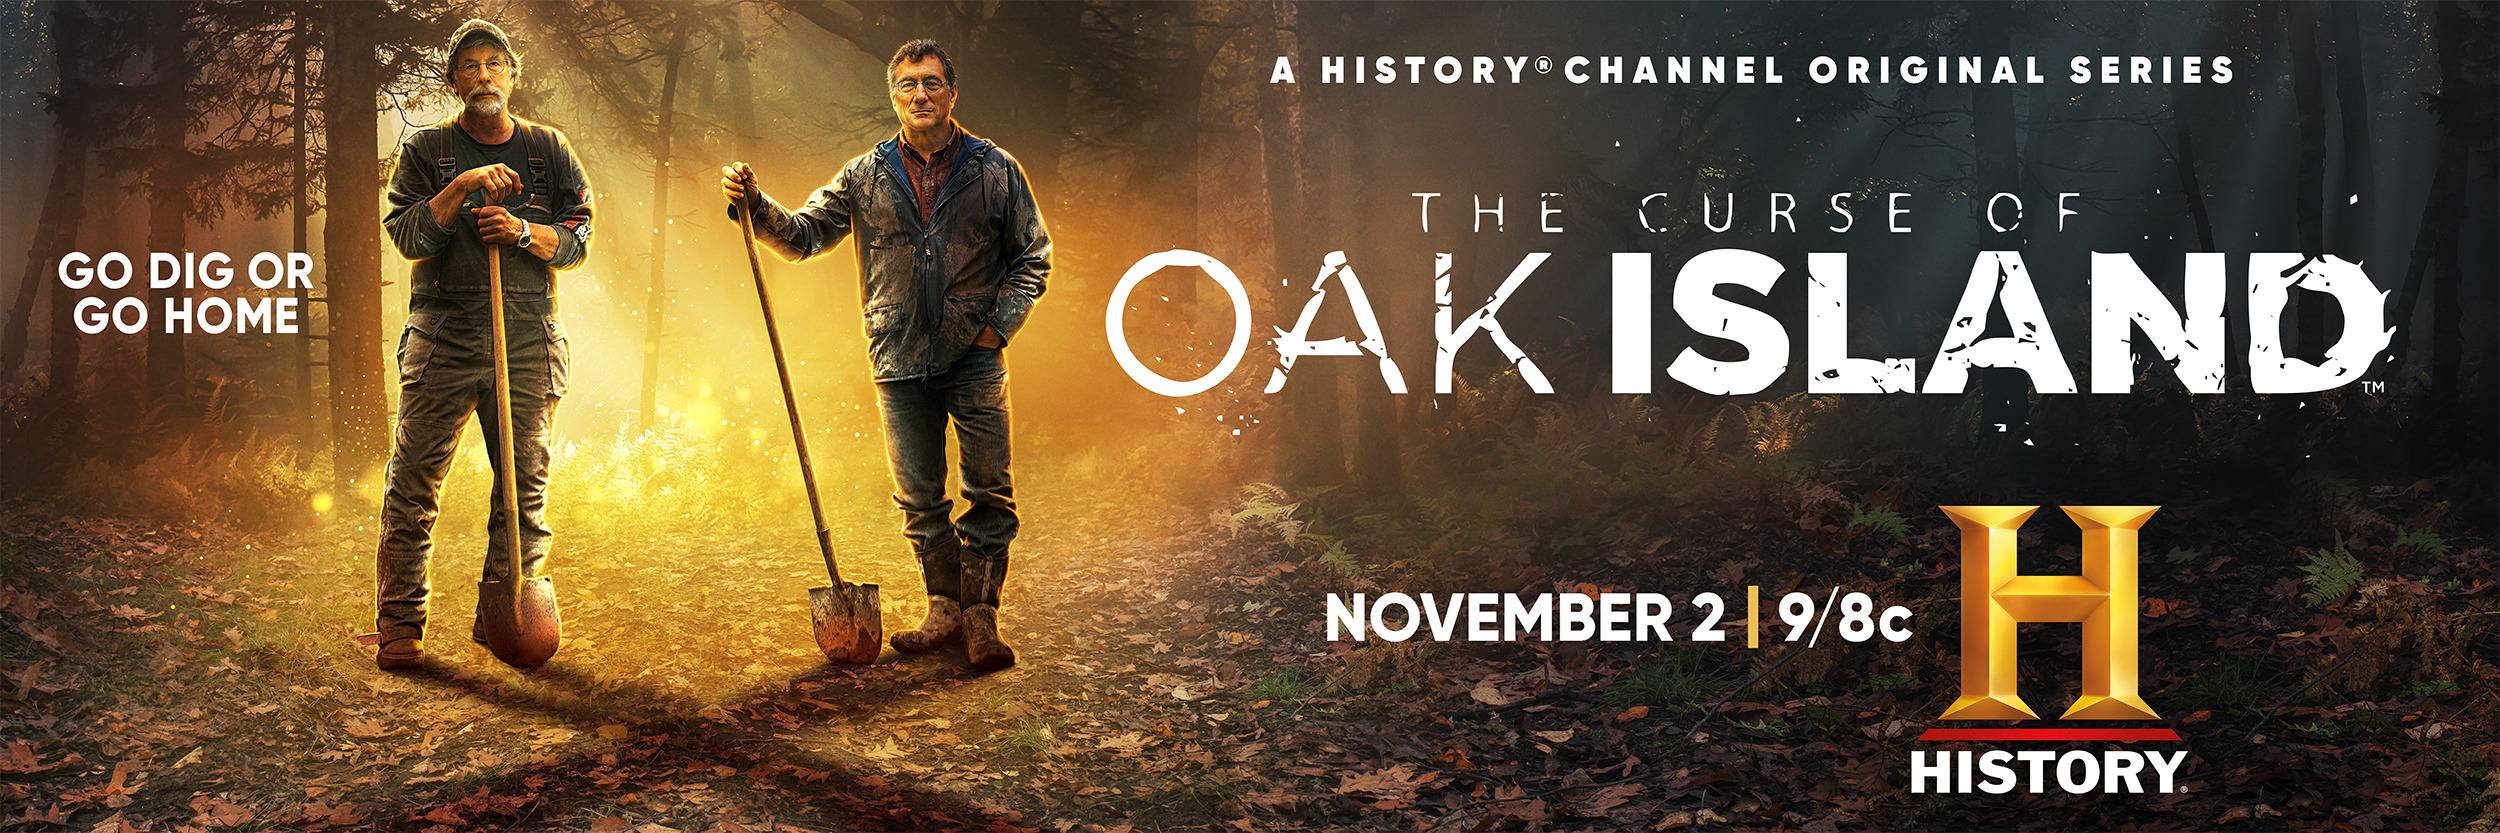 Mega Sized TV Poster Image for The Curse of Oak Island (#7 of 7)